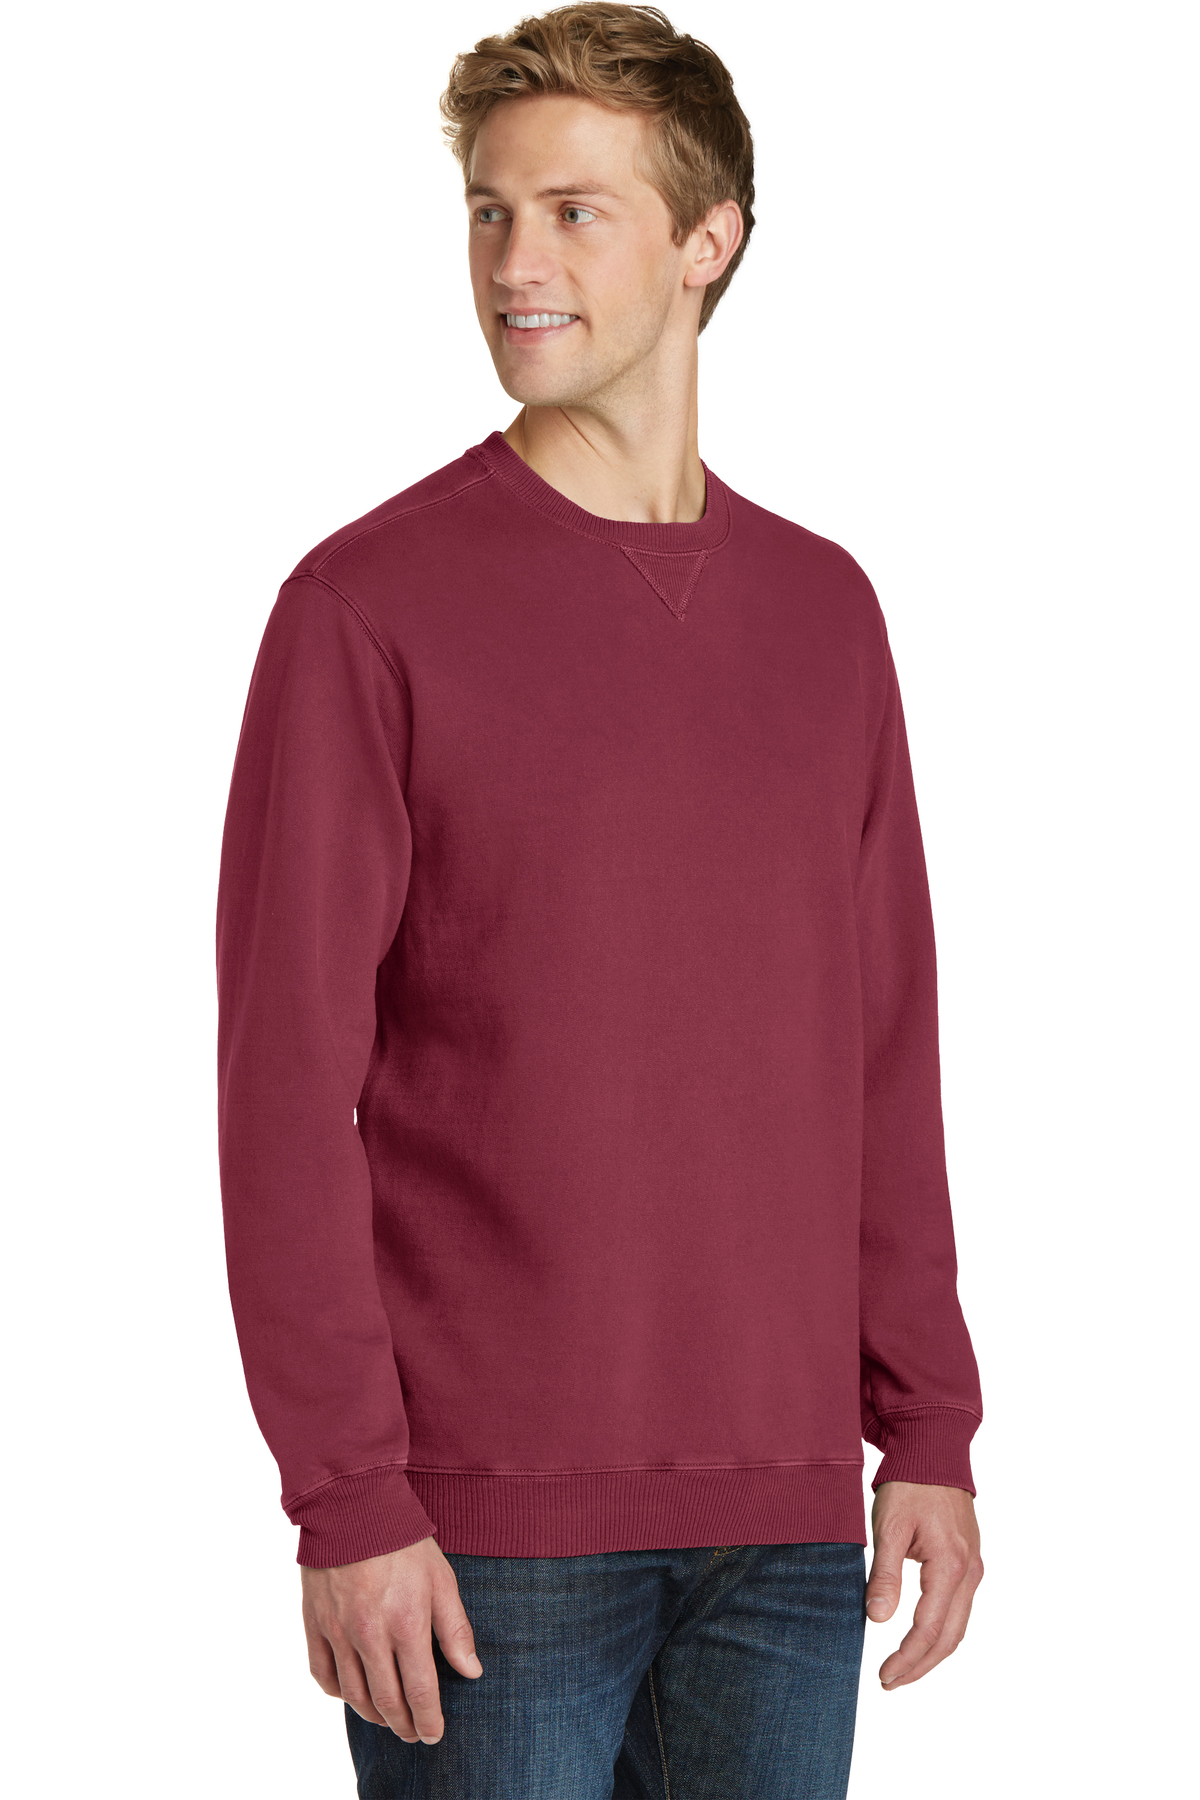 Port & Company® Beach Wash™ Garment-Dye Sweatshirt | Port & Company ...